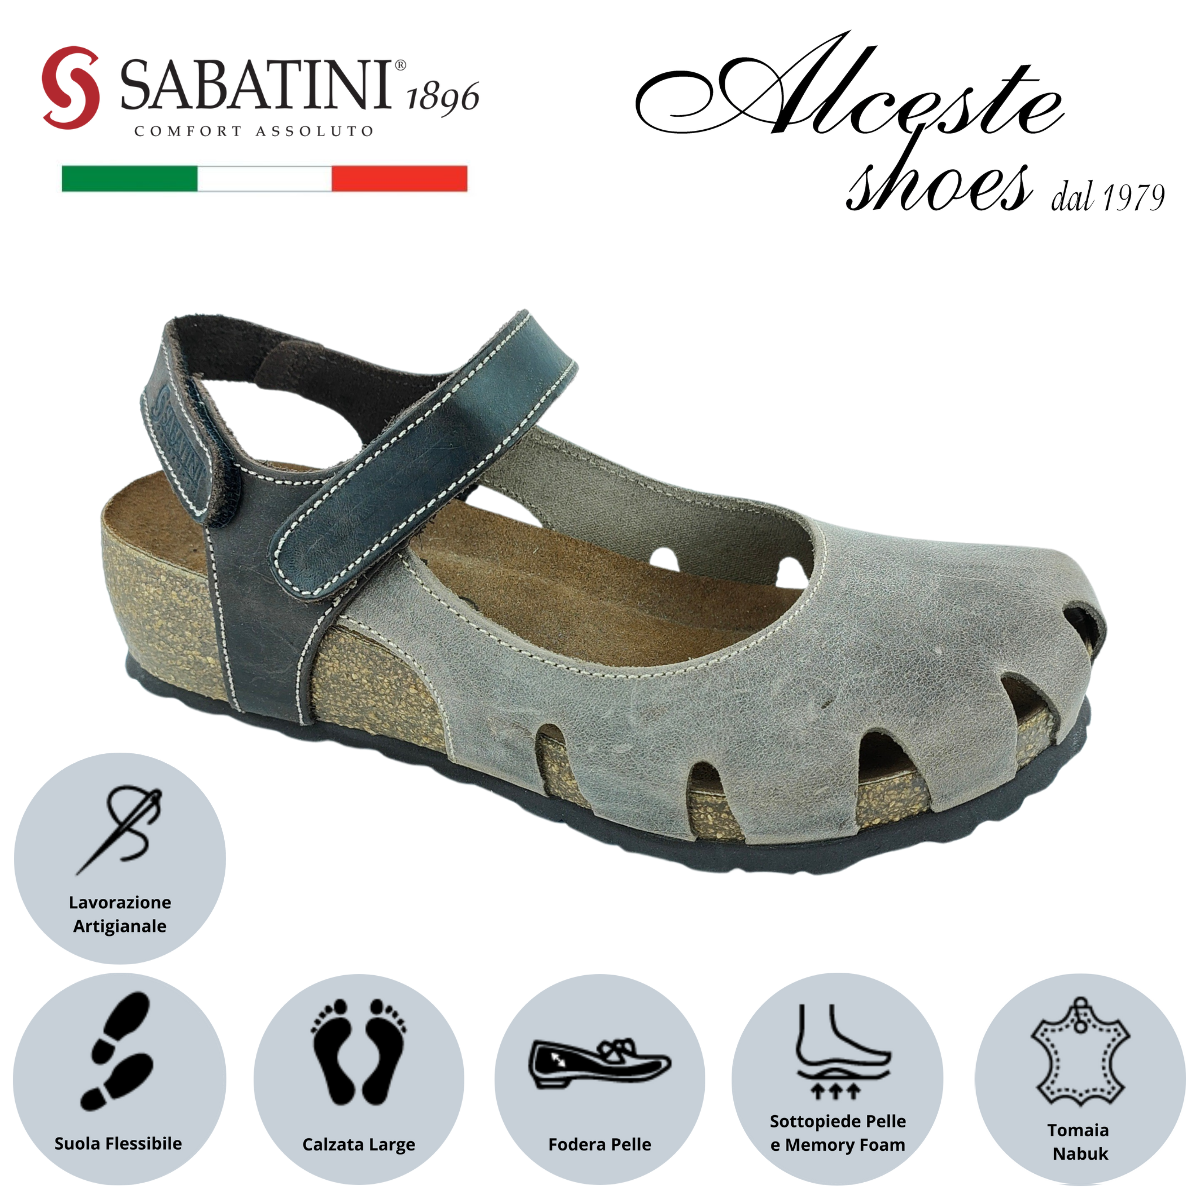 Sandalo Donna con Punta Chiusa "Sabatini" Art. 4009 in Nabuk Fango e Testa di Moro Alceste Shoes 25